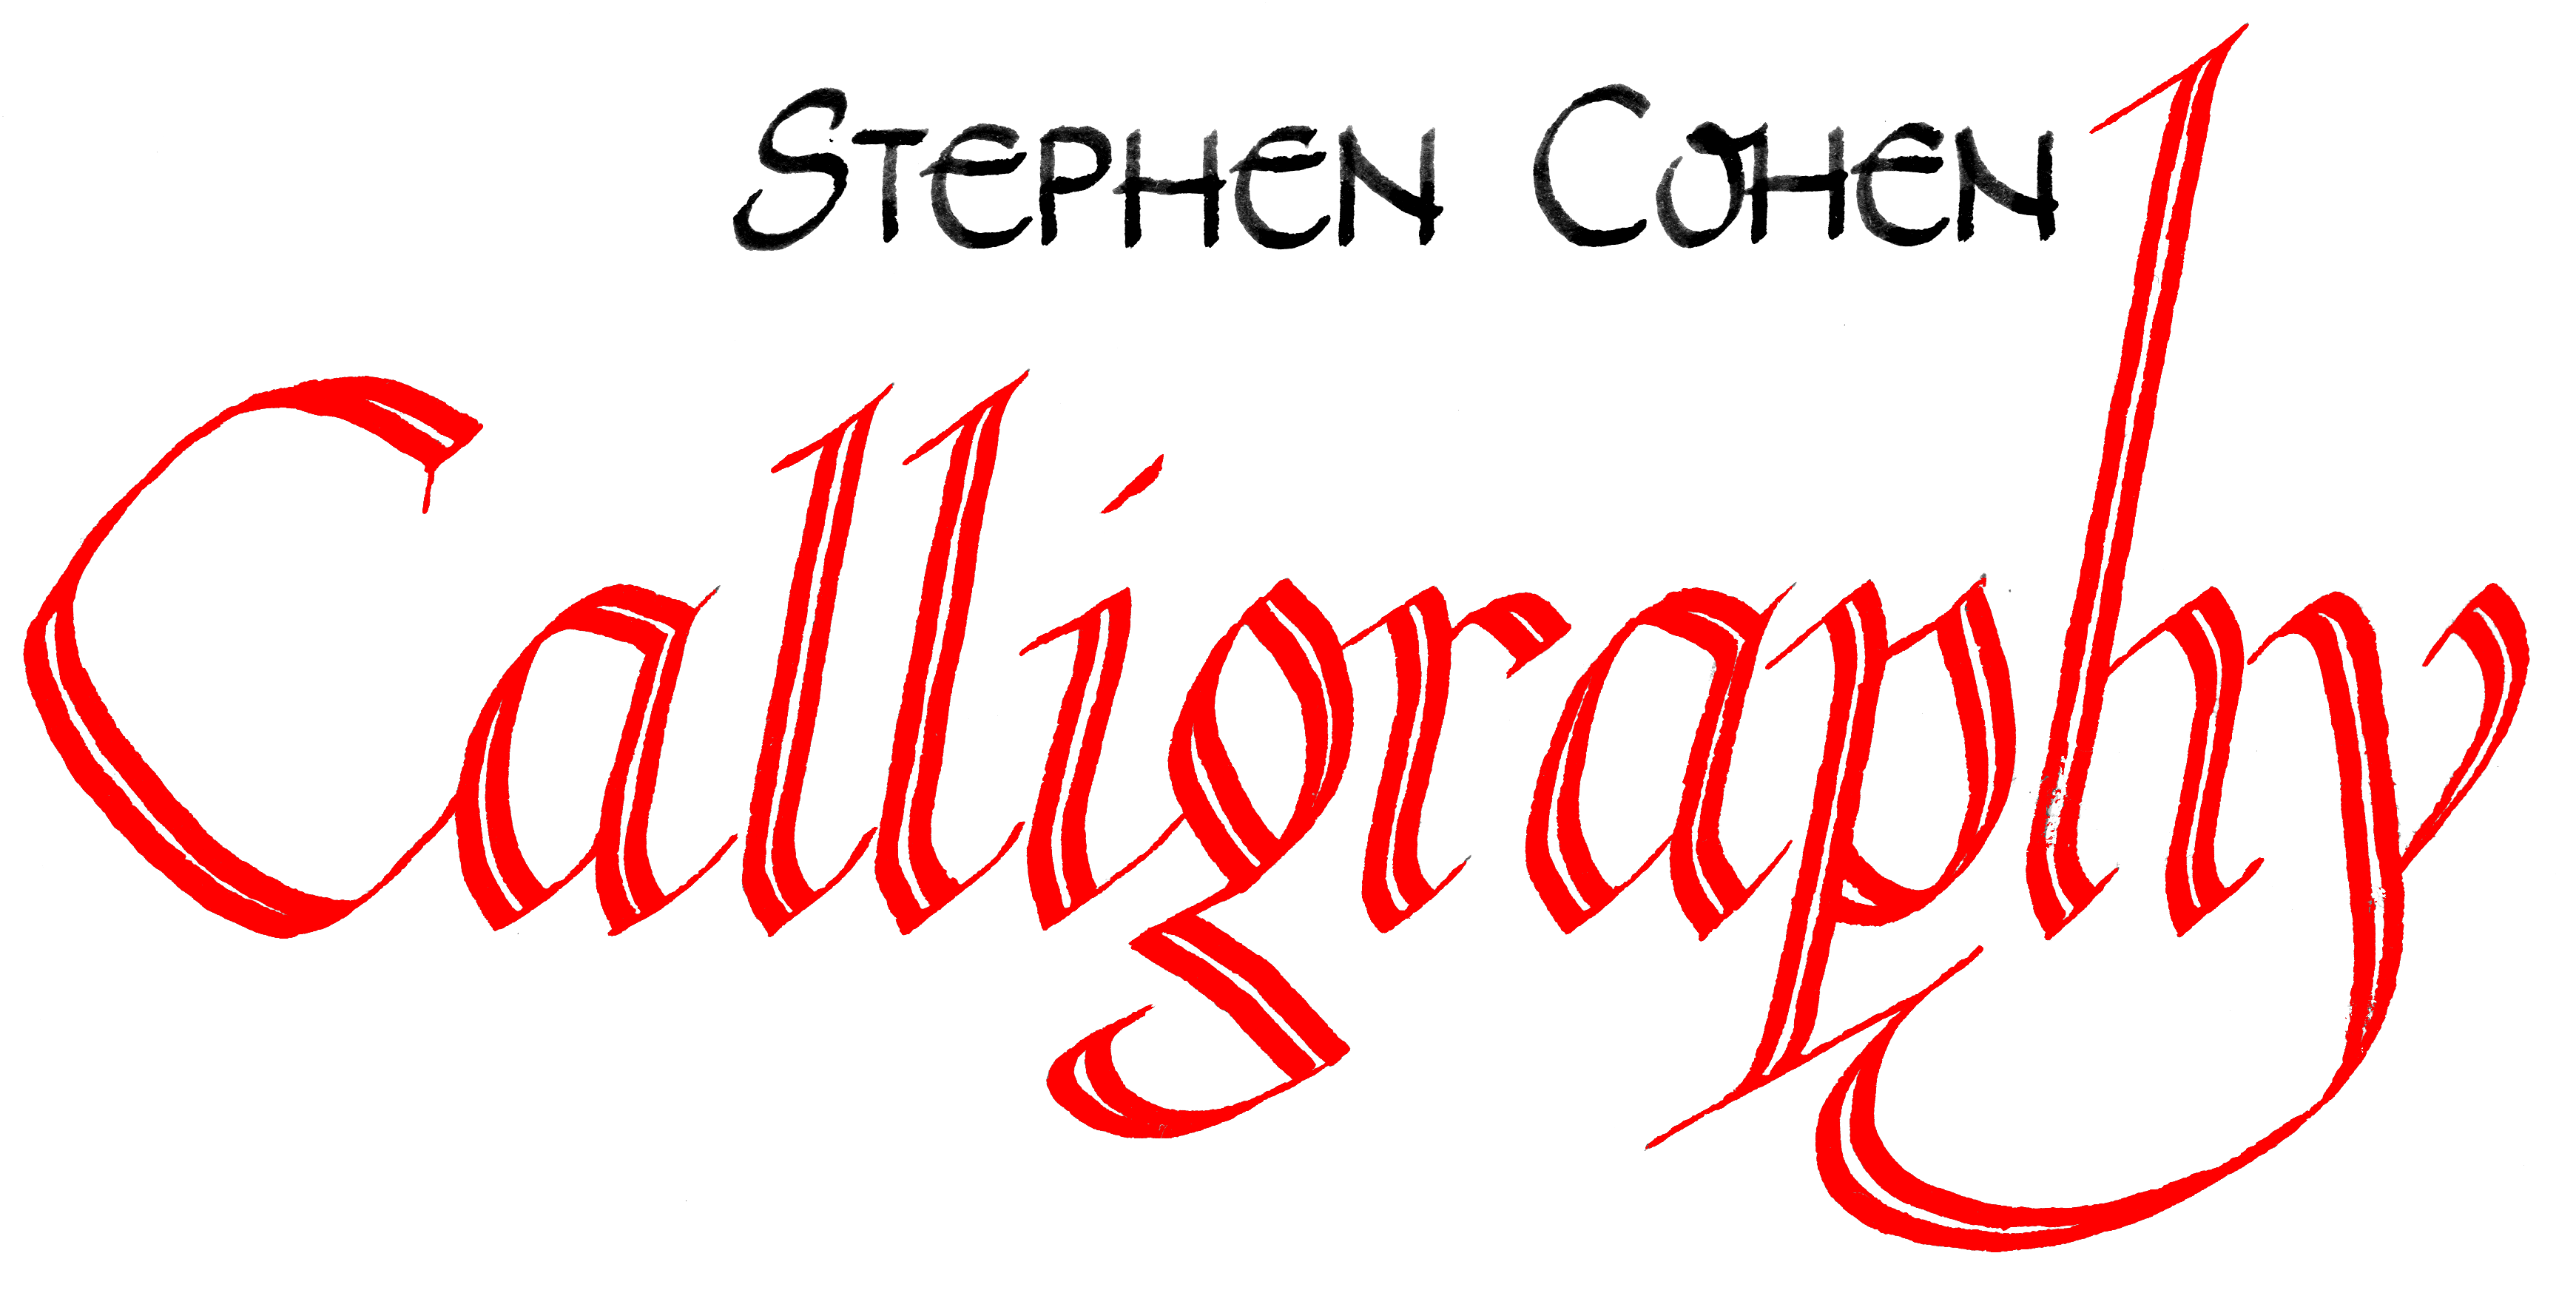 Stephen Cohen Calligraphy